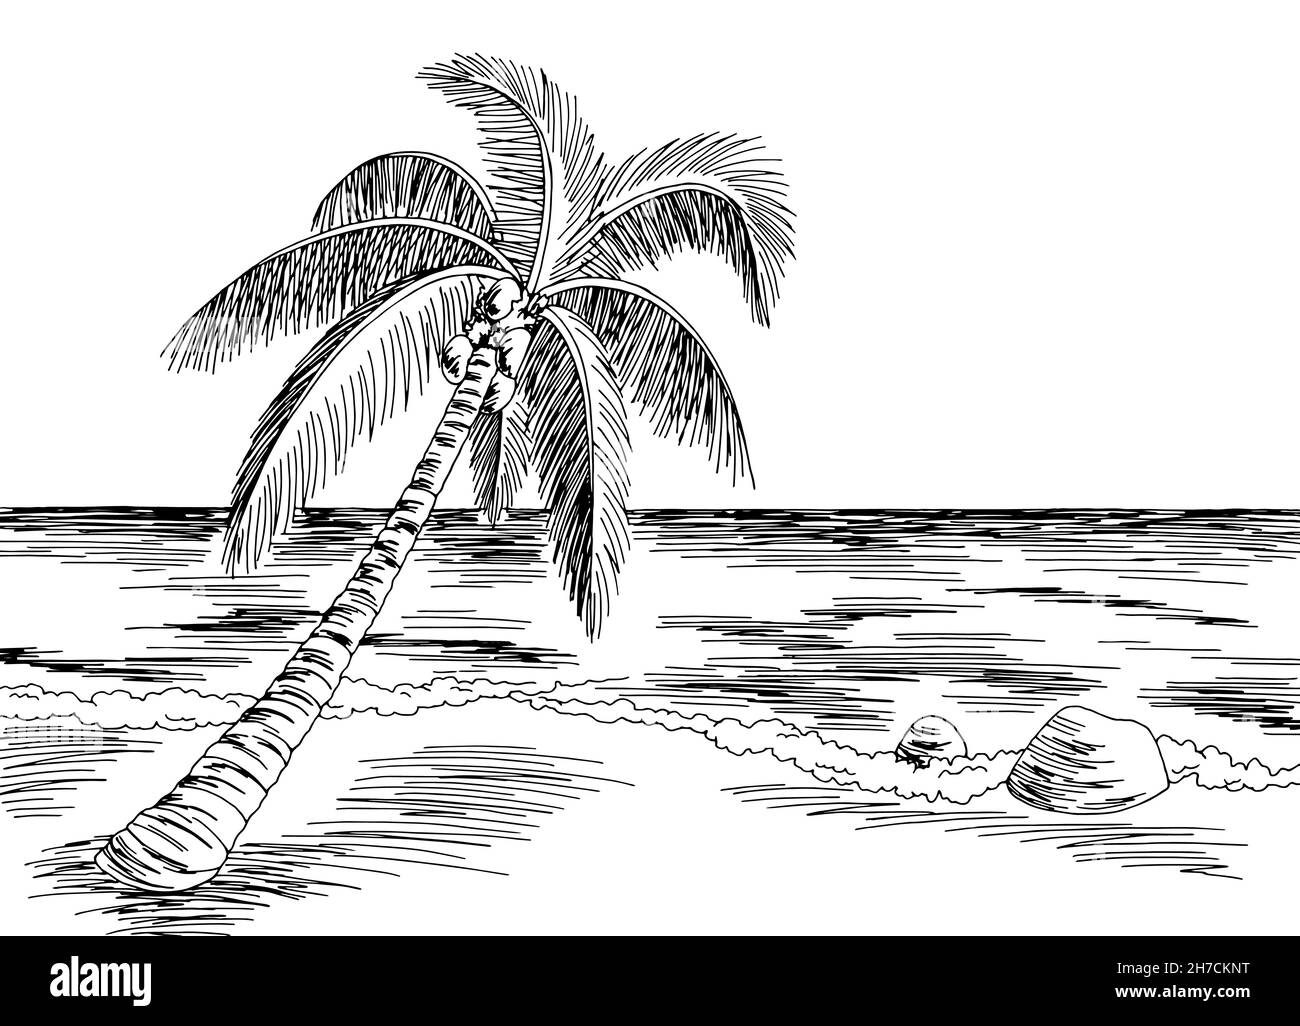 Meer Küste Grafik Strand schwarz weiß Landschaft Skizze Illustration Vektor Stock Vektor